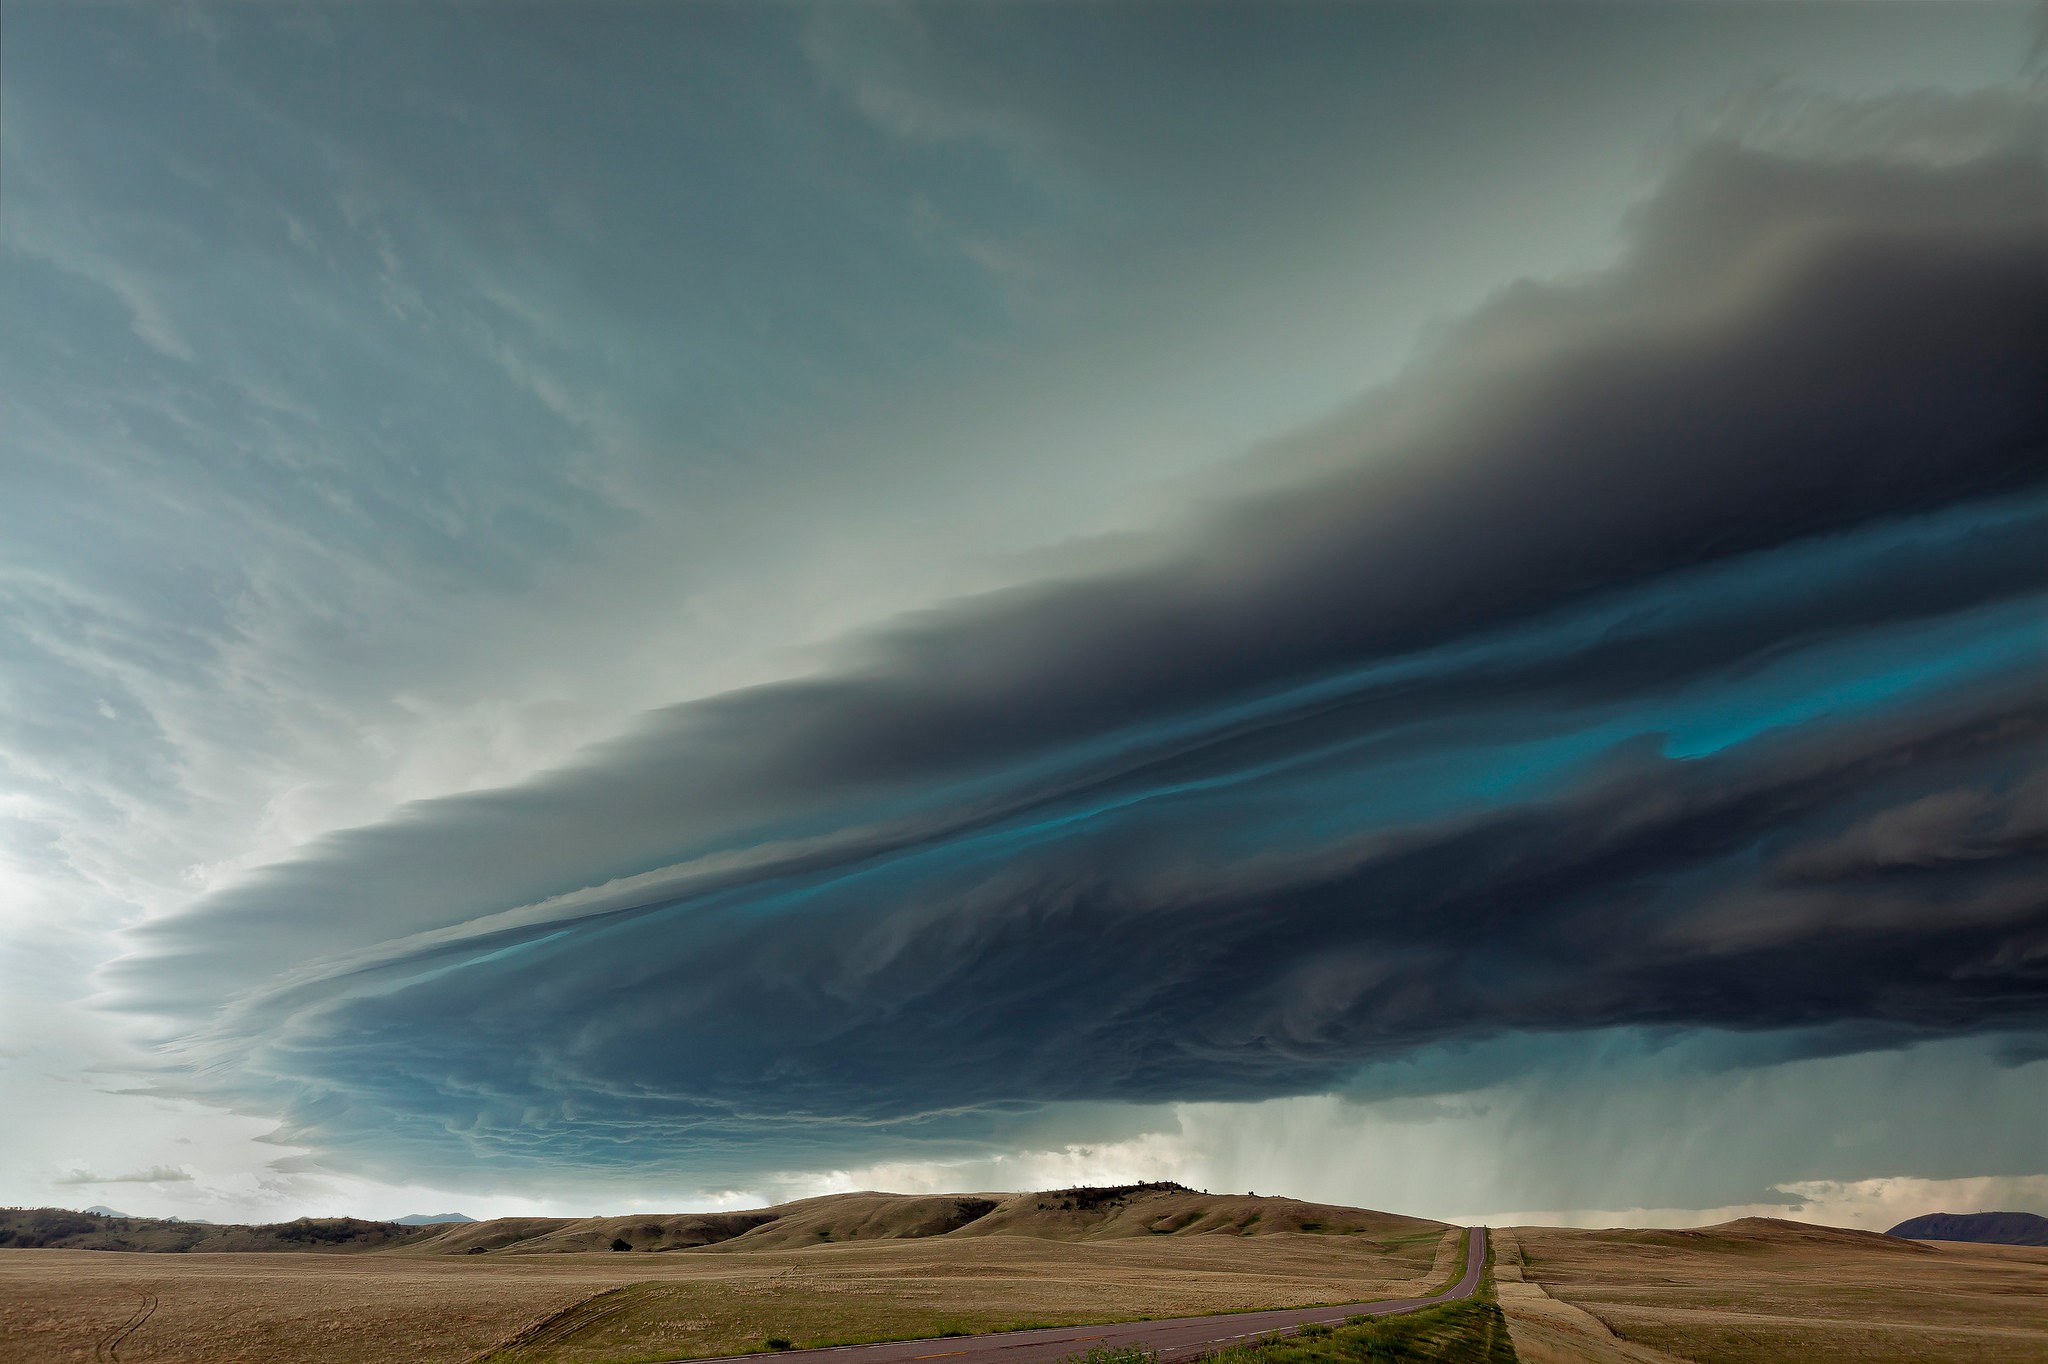 General 2048x1364 Montana landscape storm clouds plains road overcast USA sky nature